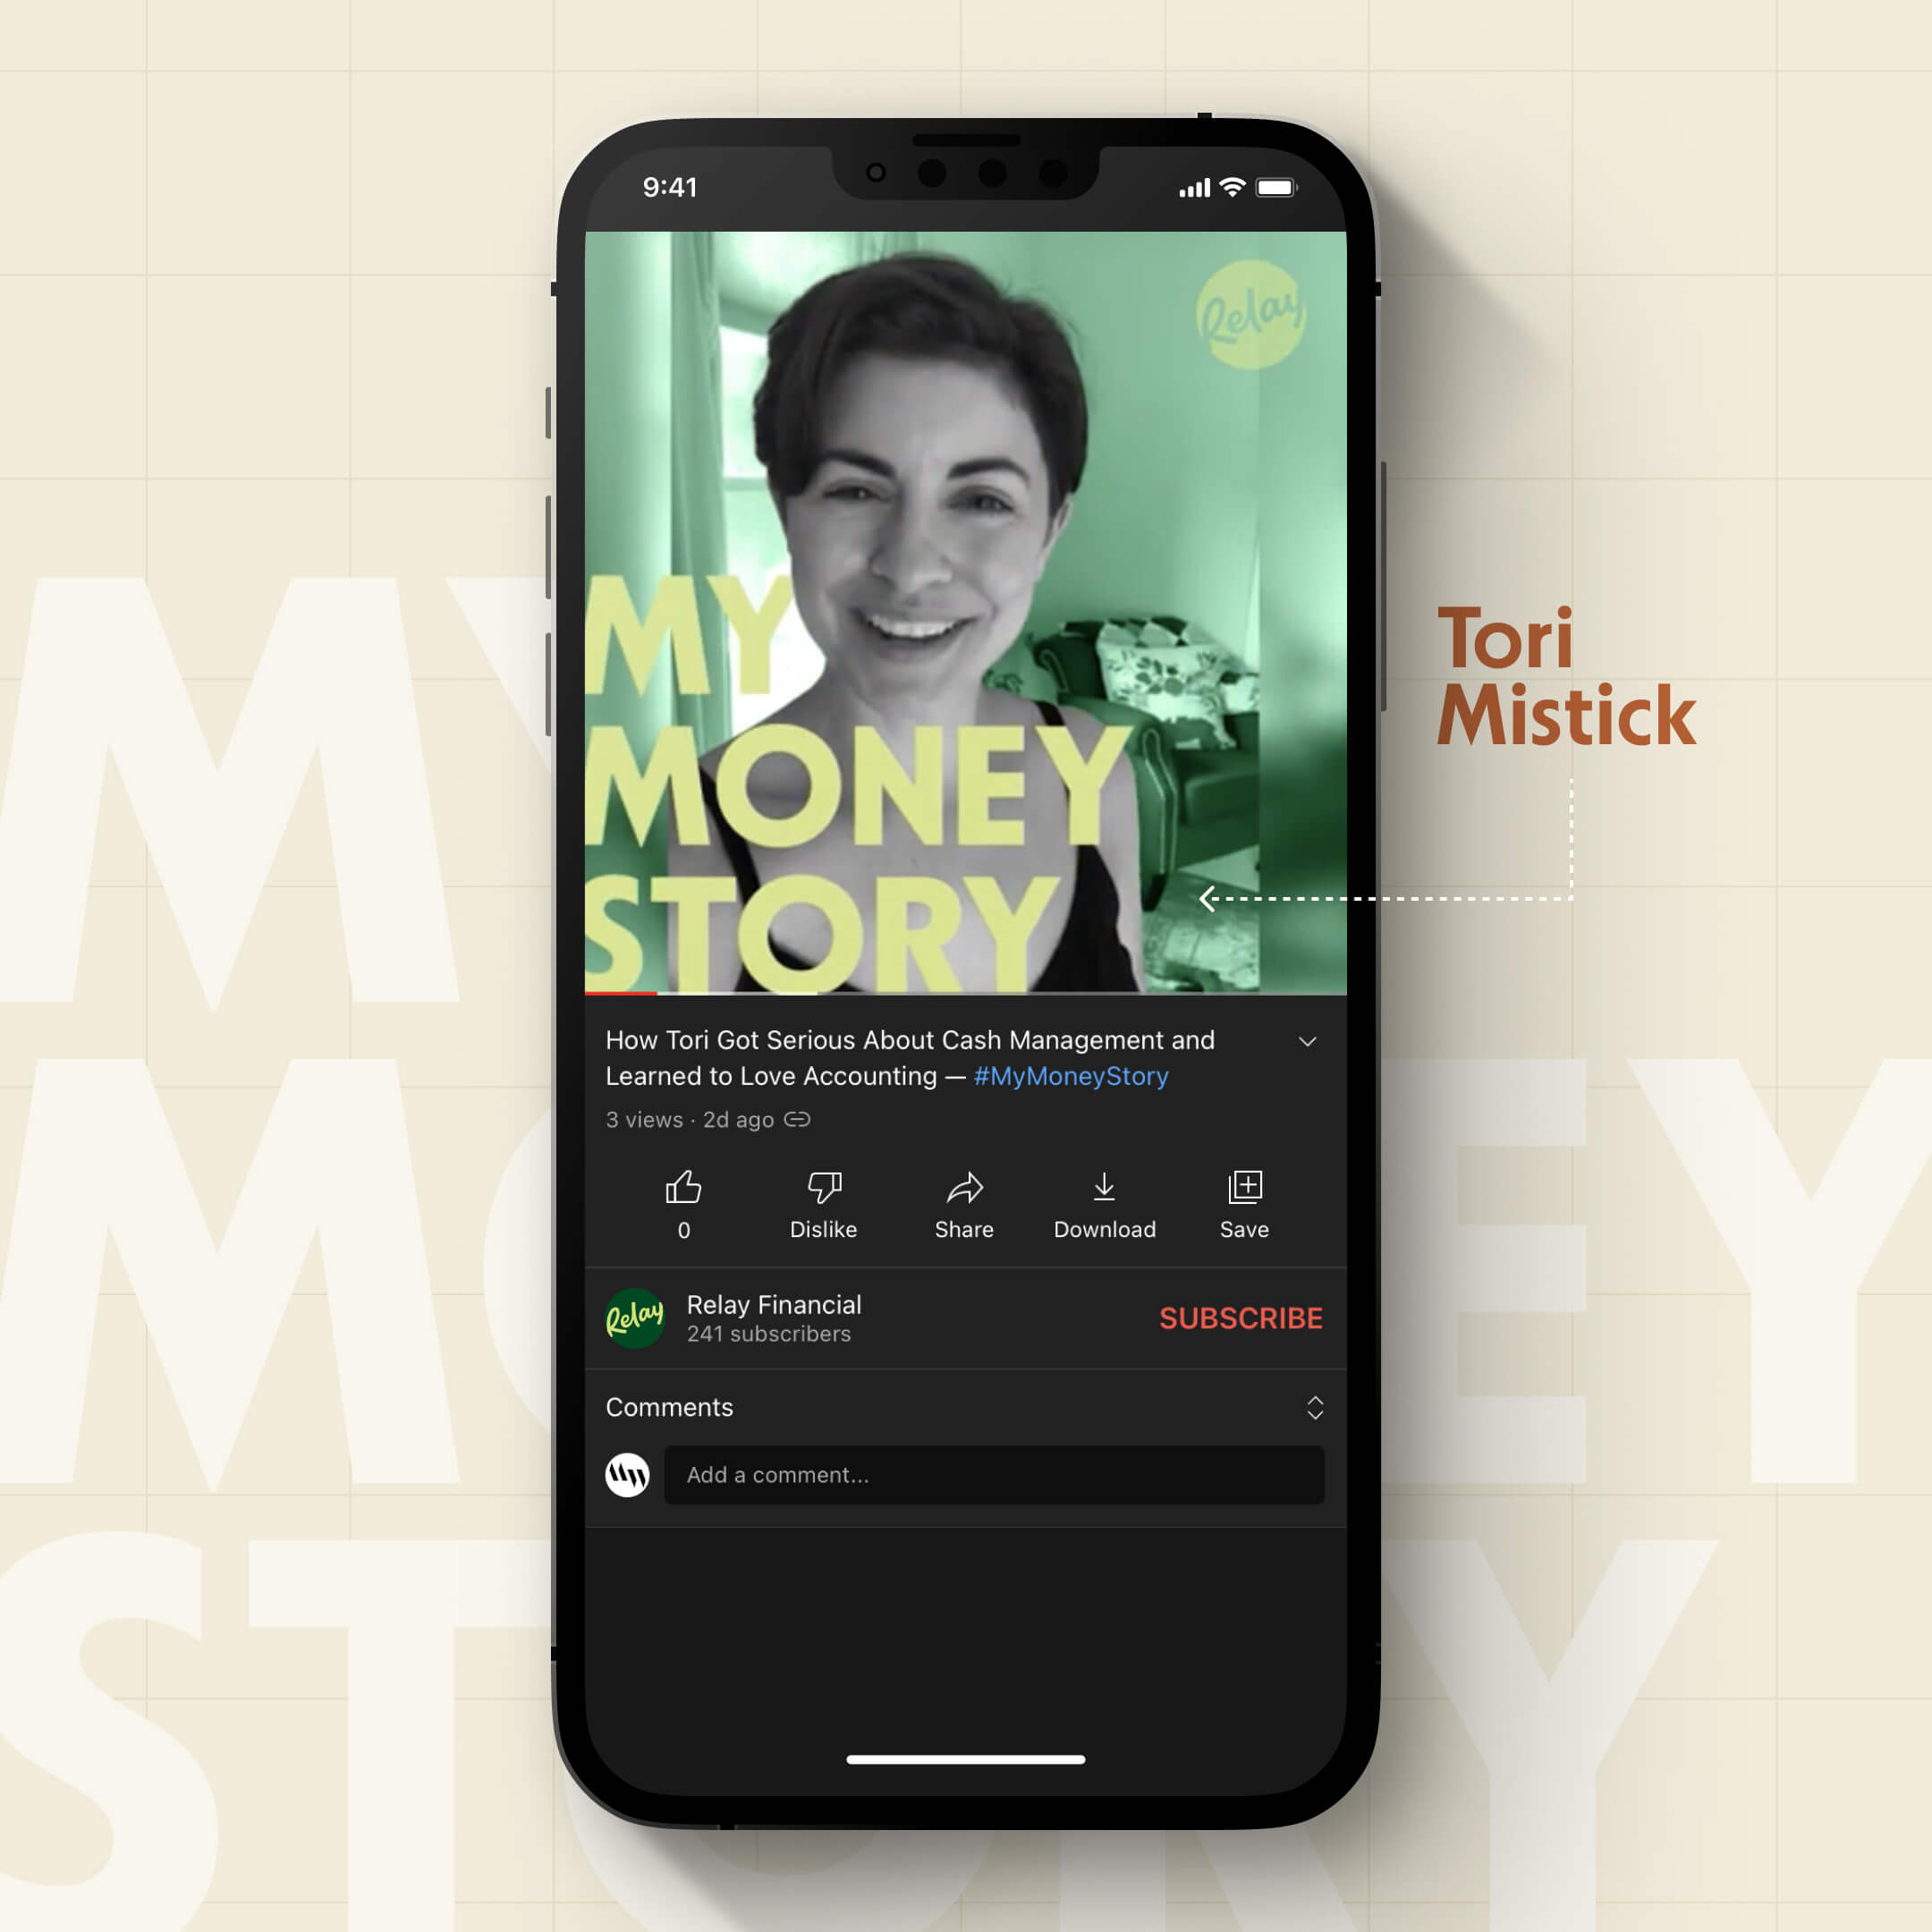 Tori Mistick's My Money Story video